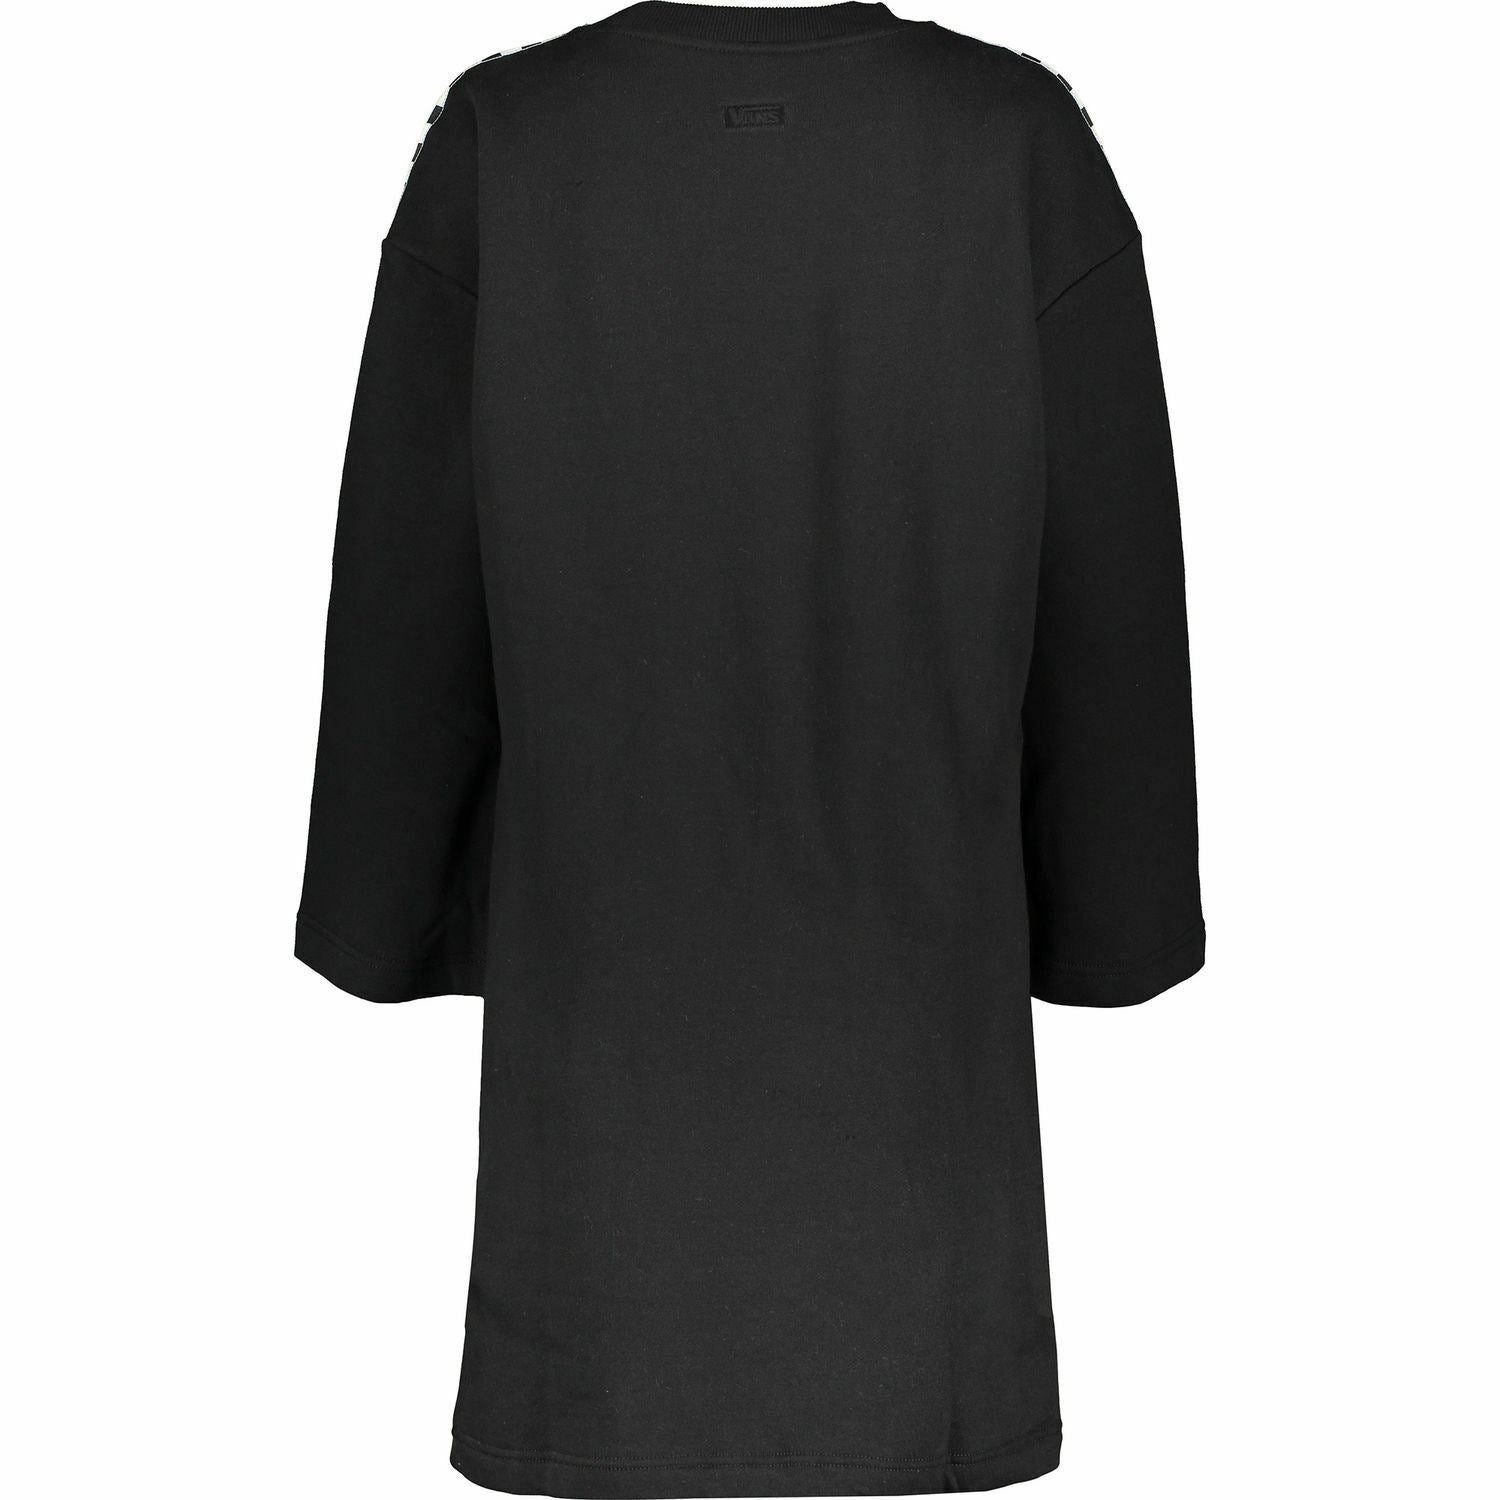 VANS Women's Black Sweatshirt Dress, Shoulder Tape, Black, size XS